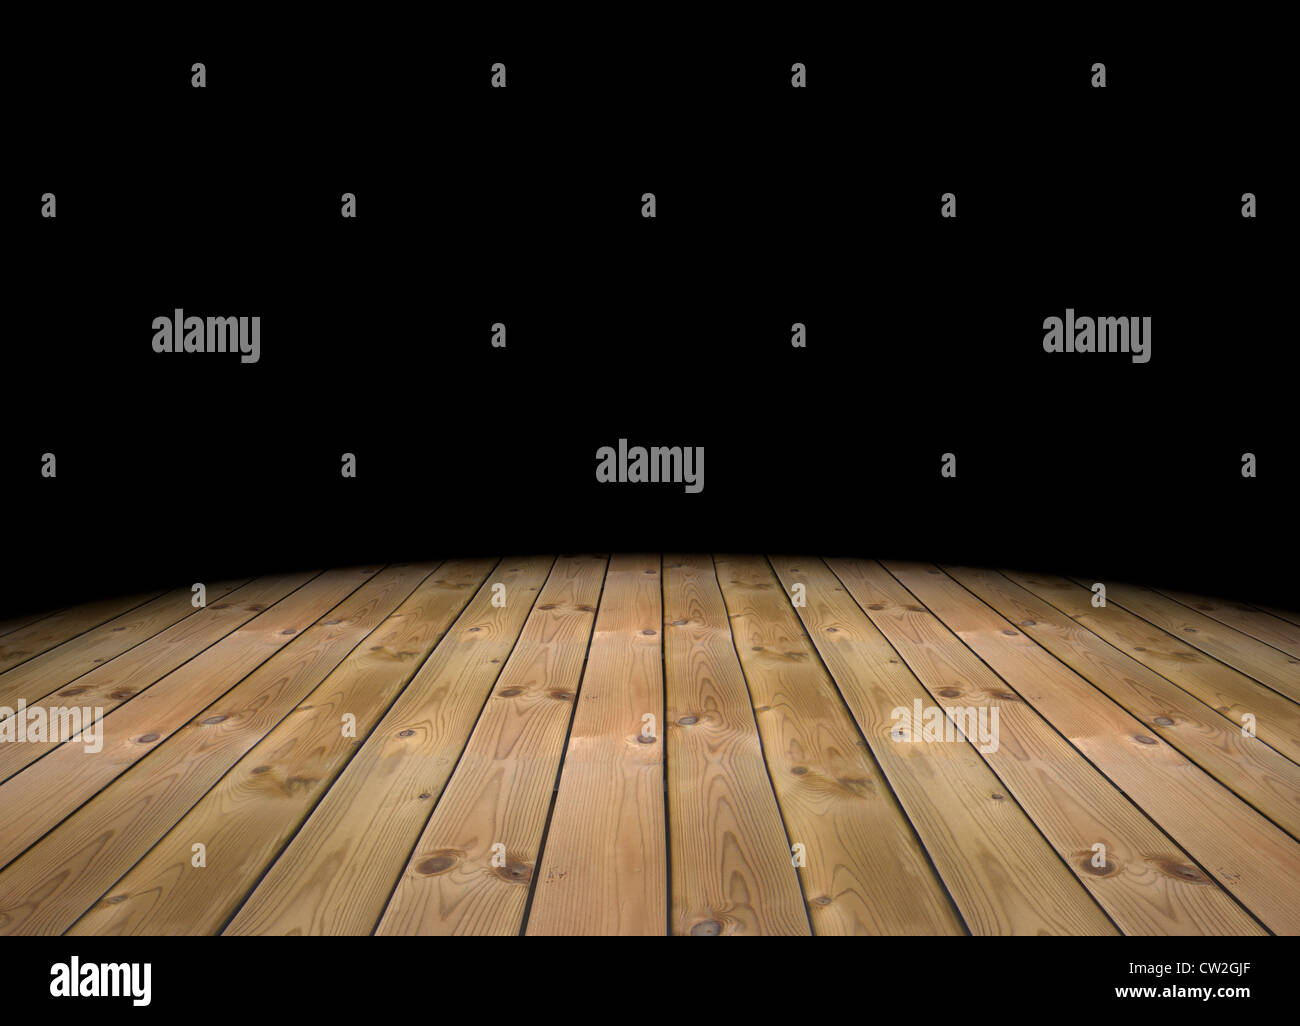 3D leer abstrakte dunklen Raum mit Holzboden Stockfoto